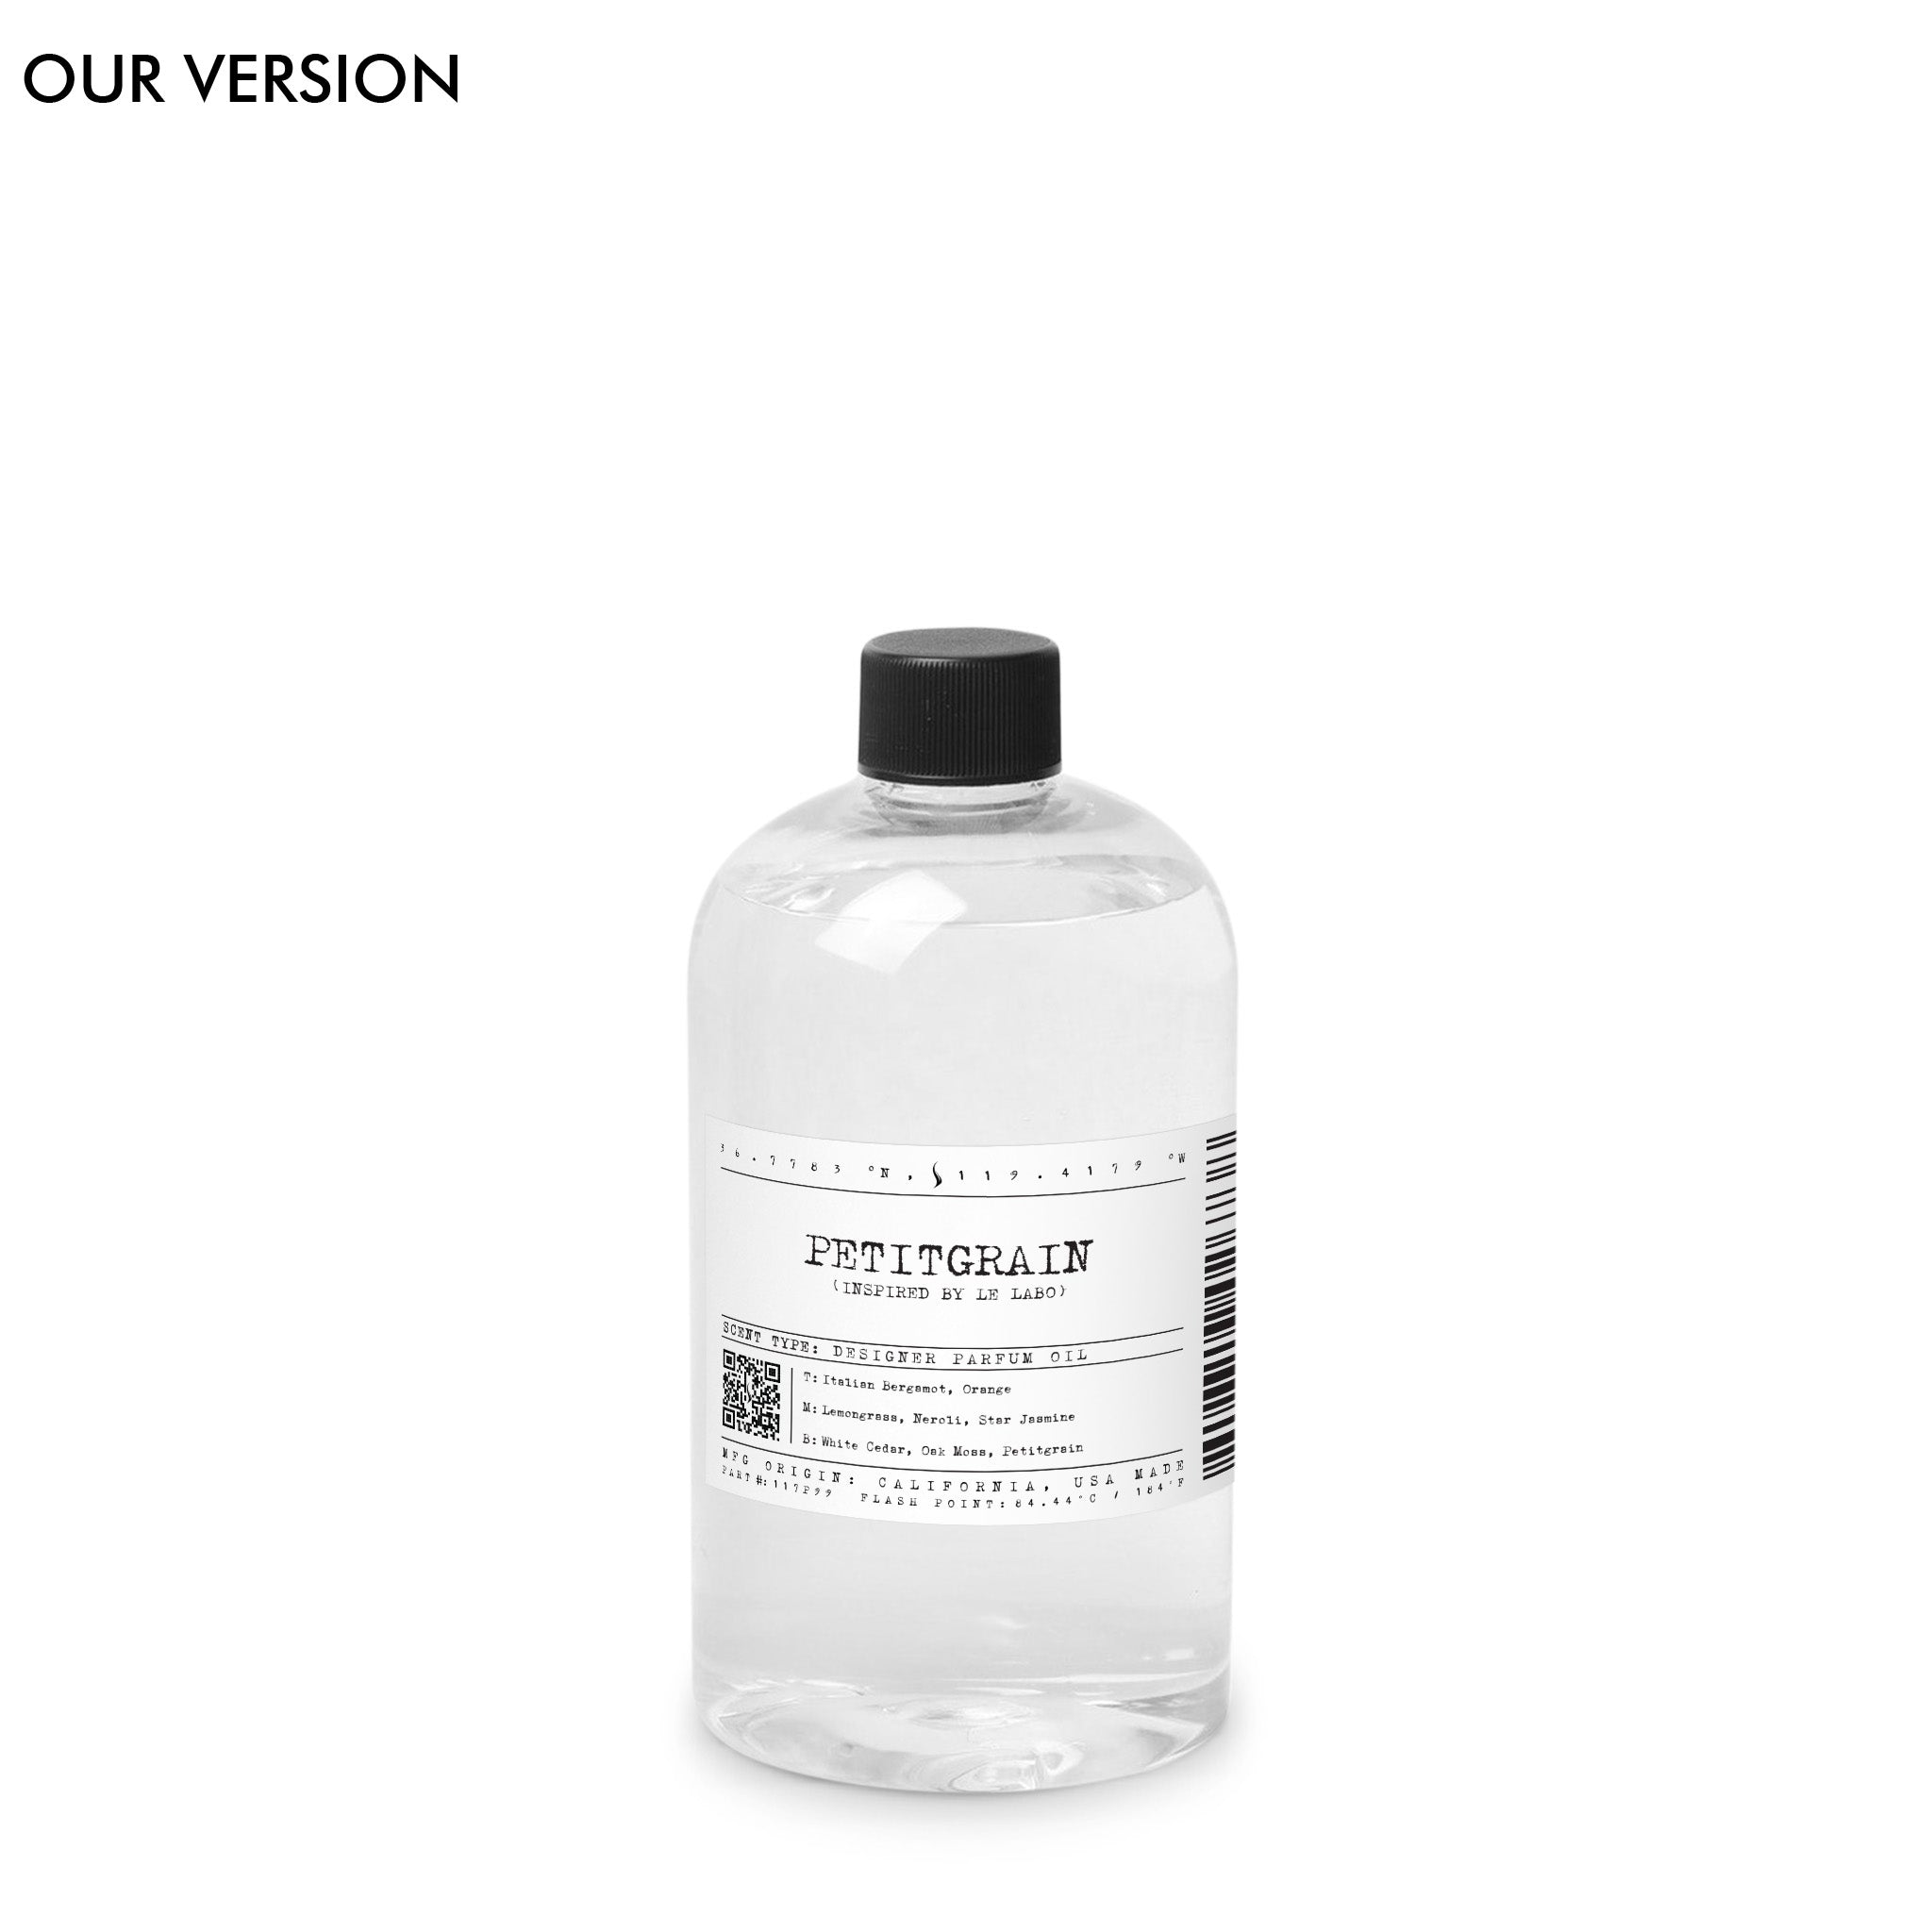 Petitgrain (our version) Fragrance Oil